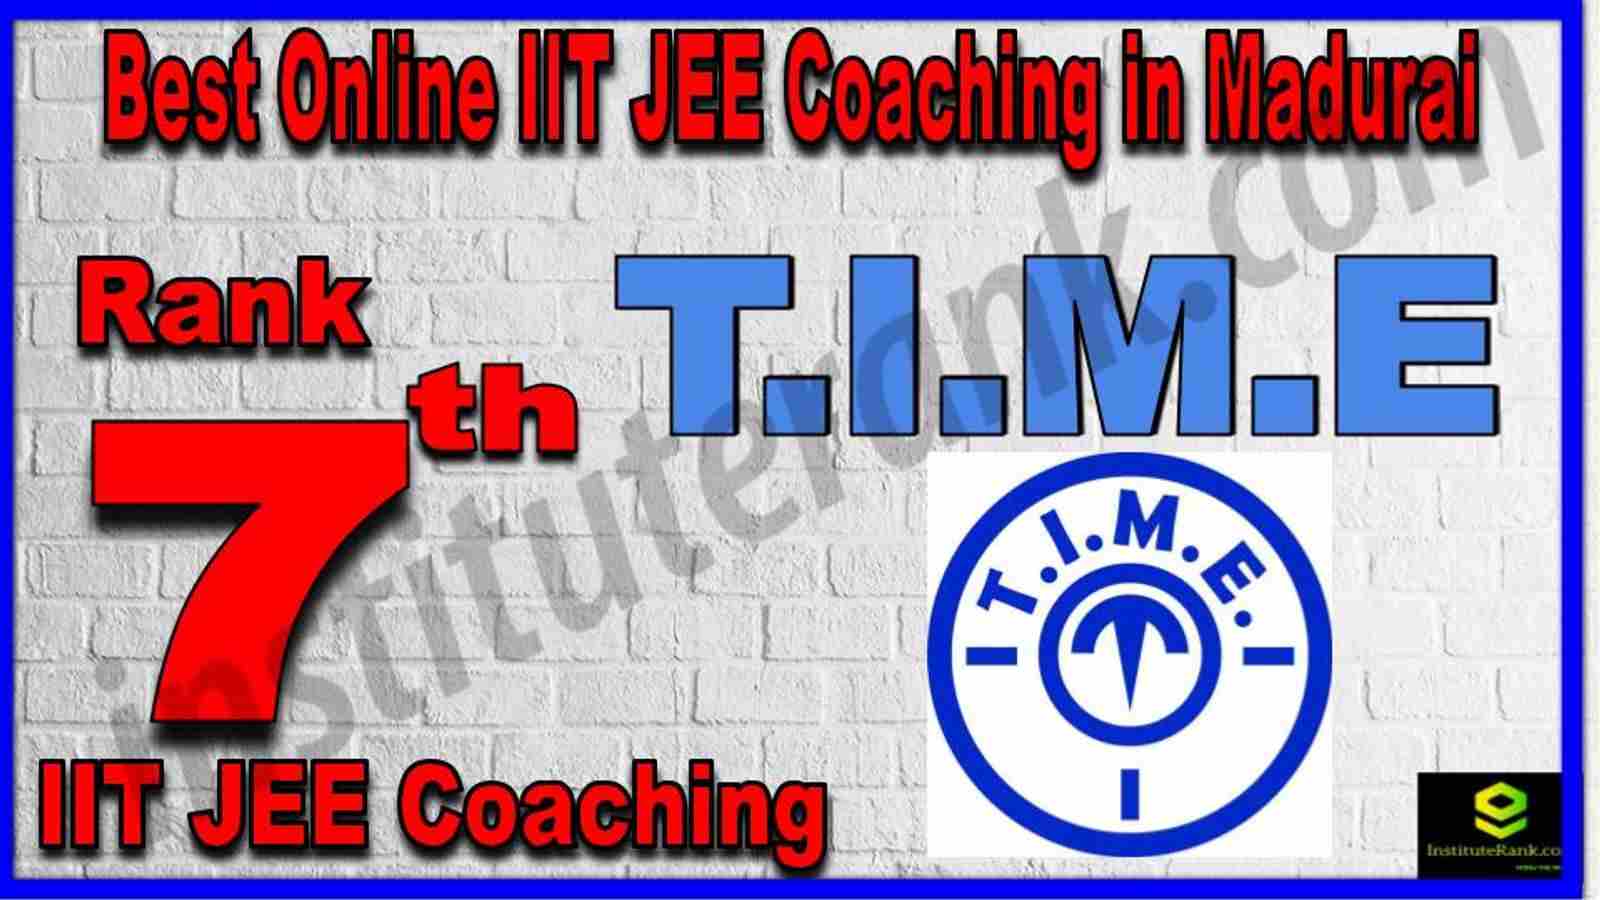 Rank 7th Best Online IIT JEE Coaching in Madurai